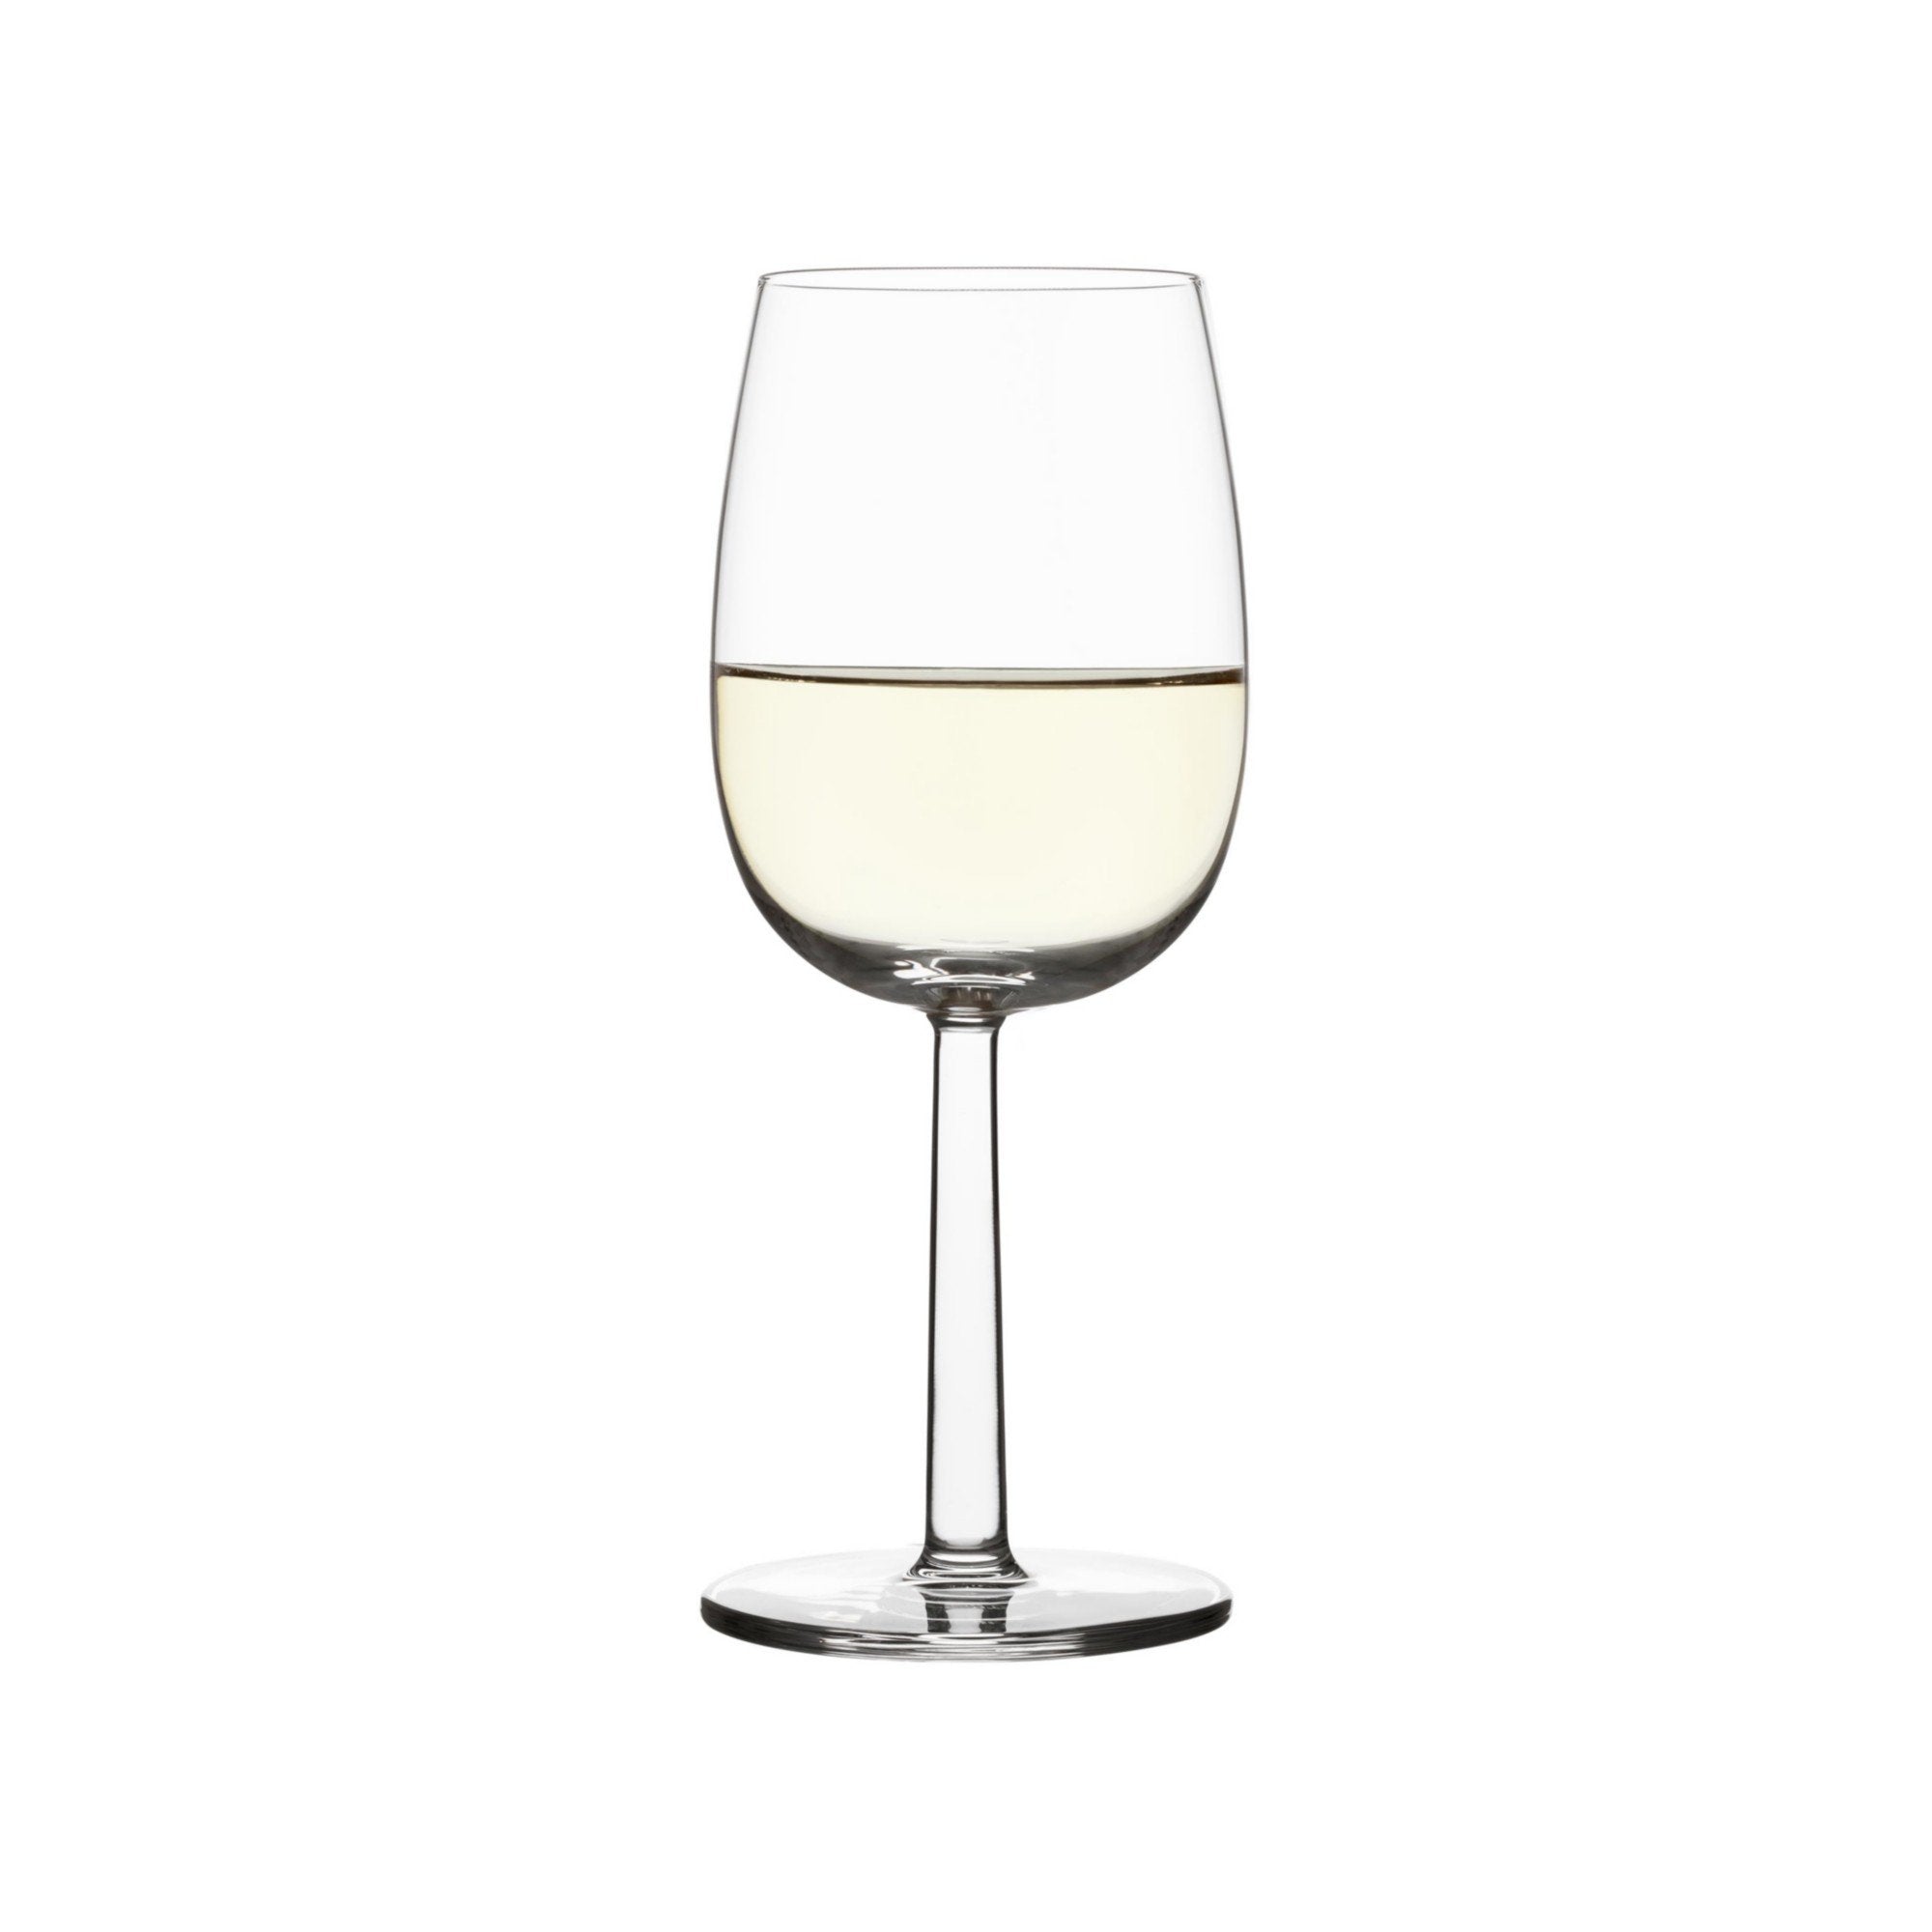 Iittala Raami White Wine Glasses Clear 2pcs, 28cl